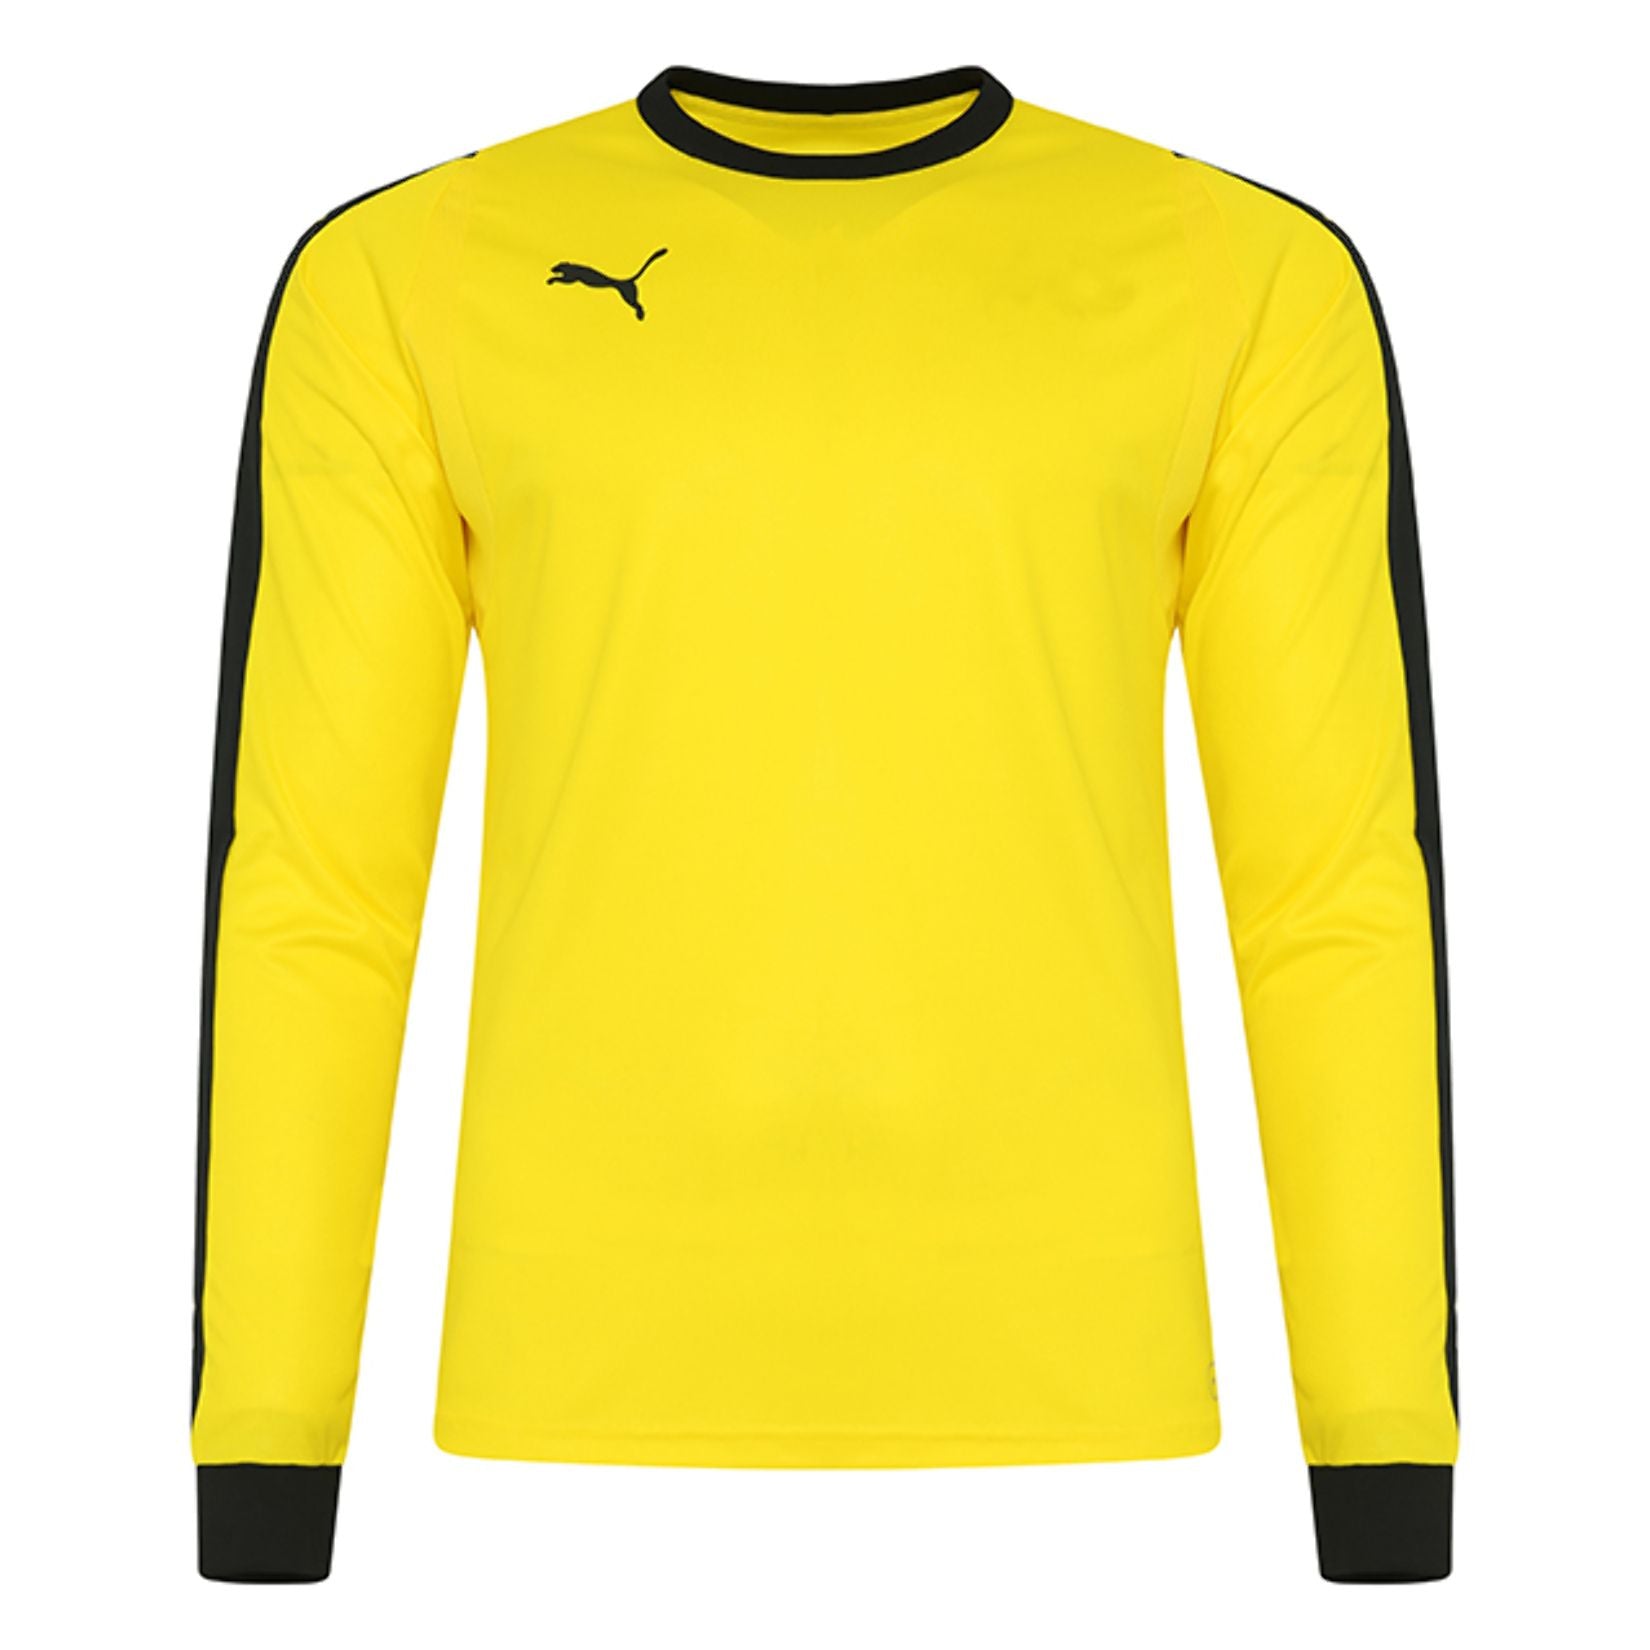 Puma LIGA Goalkeeper Jersey (yellow/black)